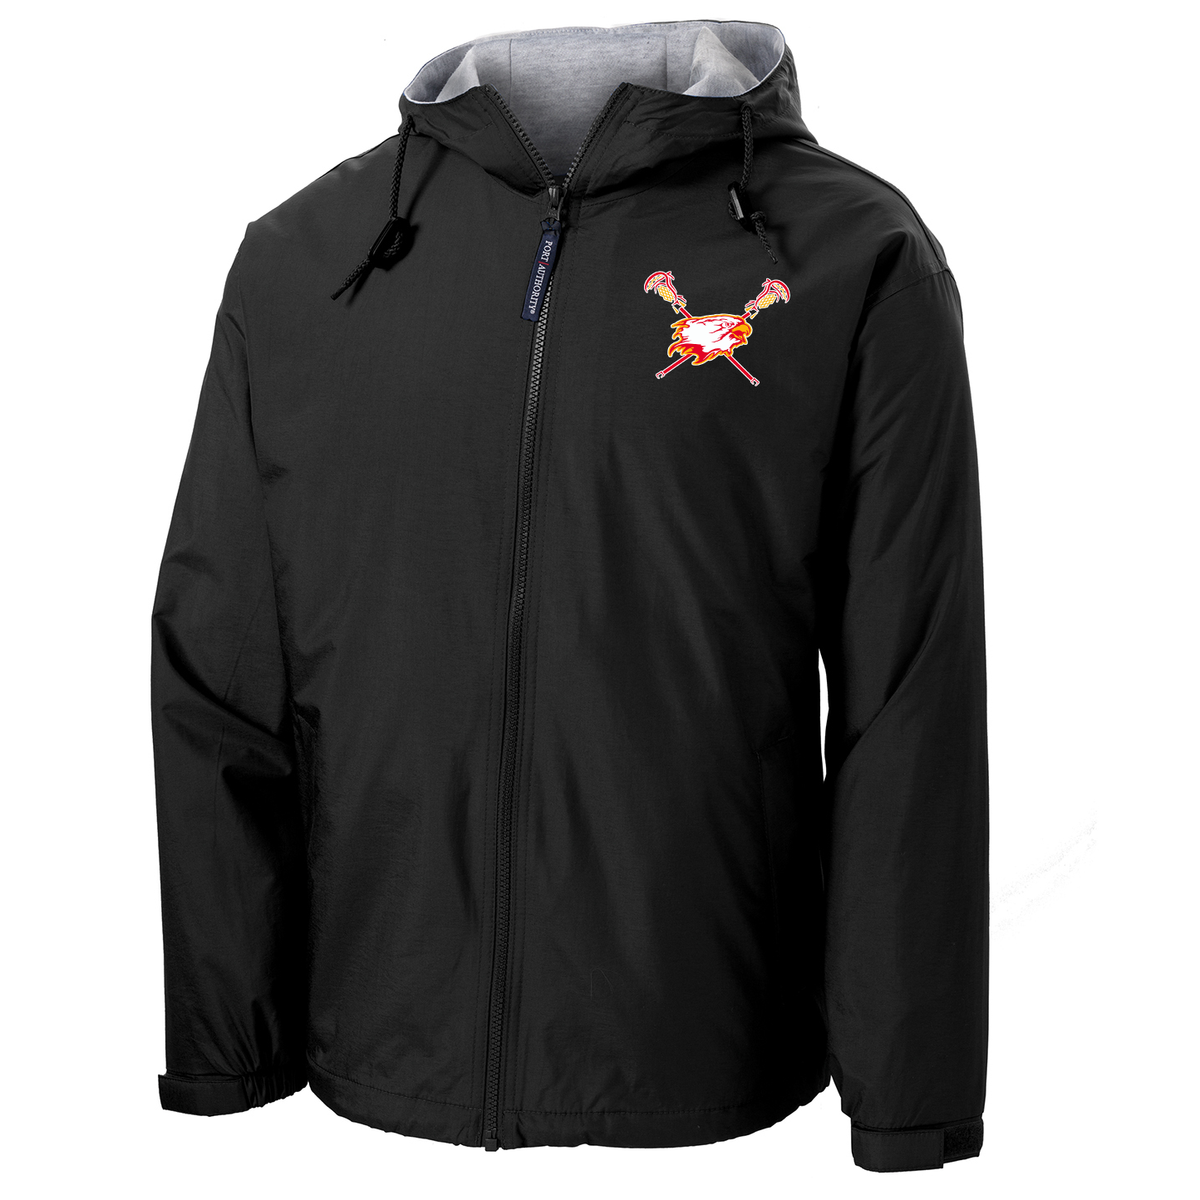 Falcons Lacrosse Club Hooded Jacket